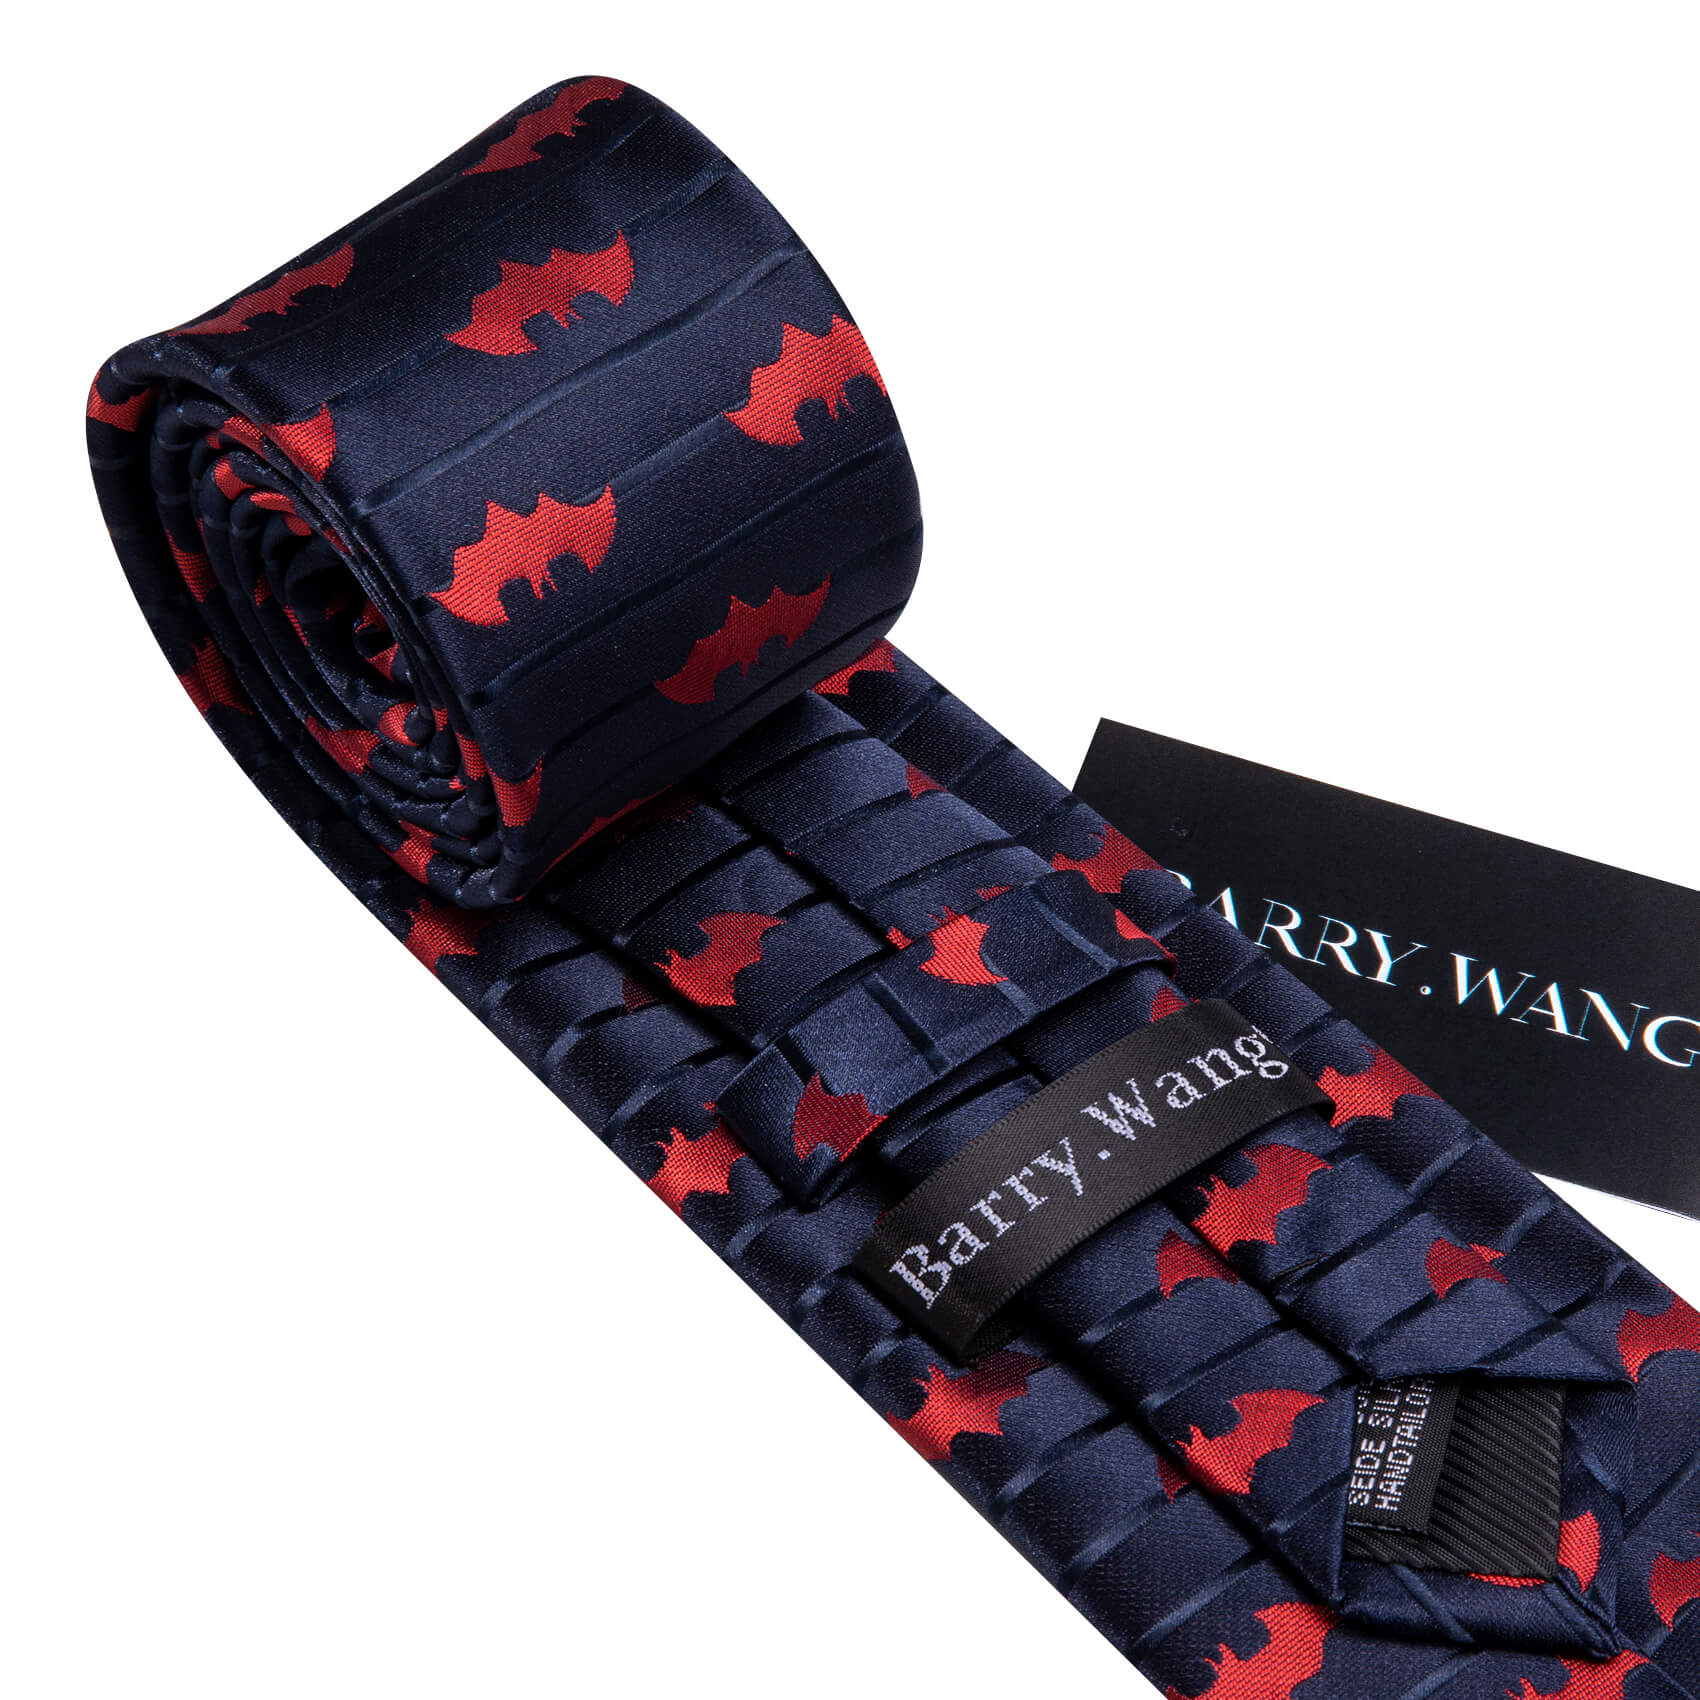 Barry.wang Blue Tie Navy Red Jacquard Woven Bat Men's Silk Tie Set